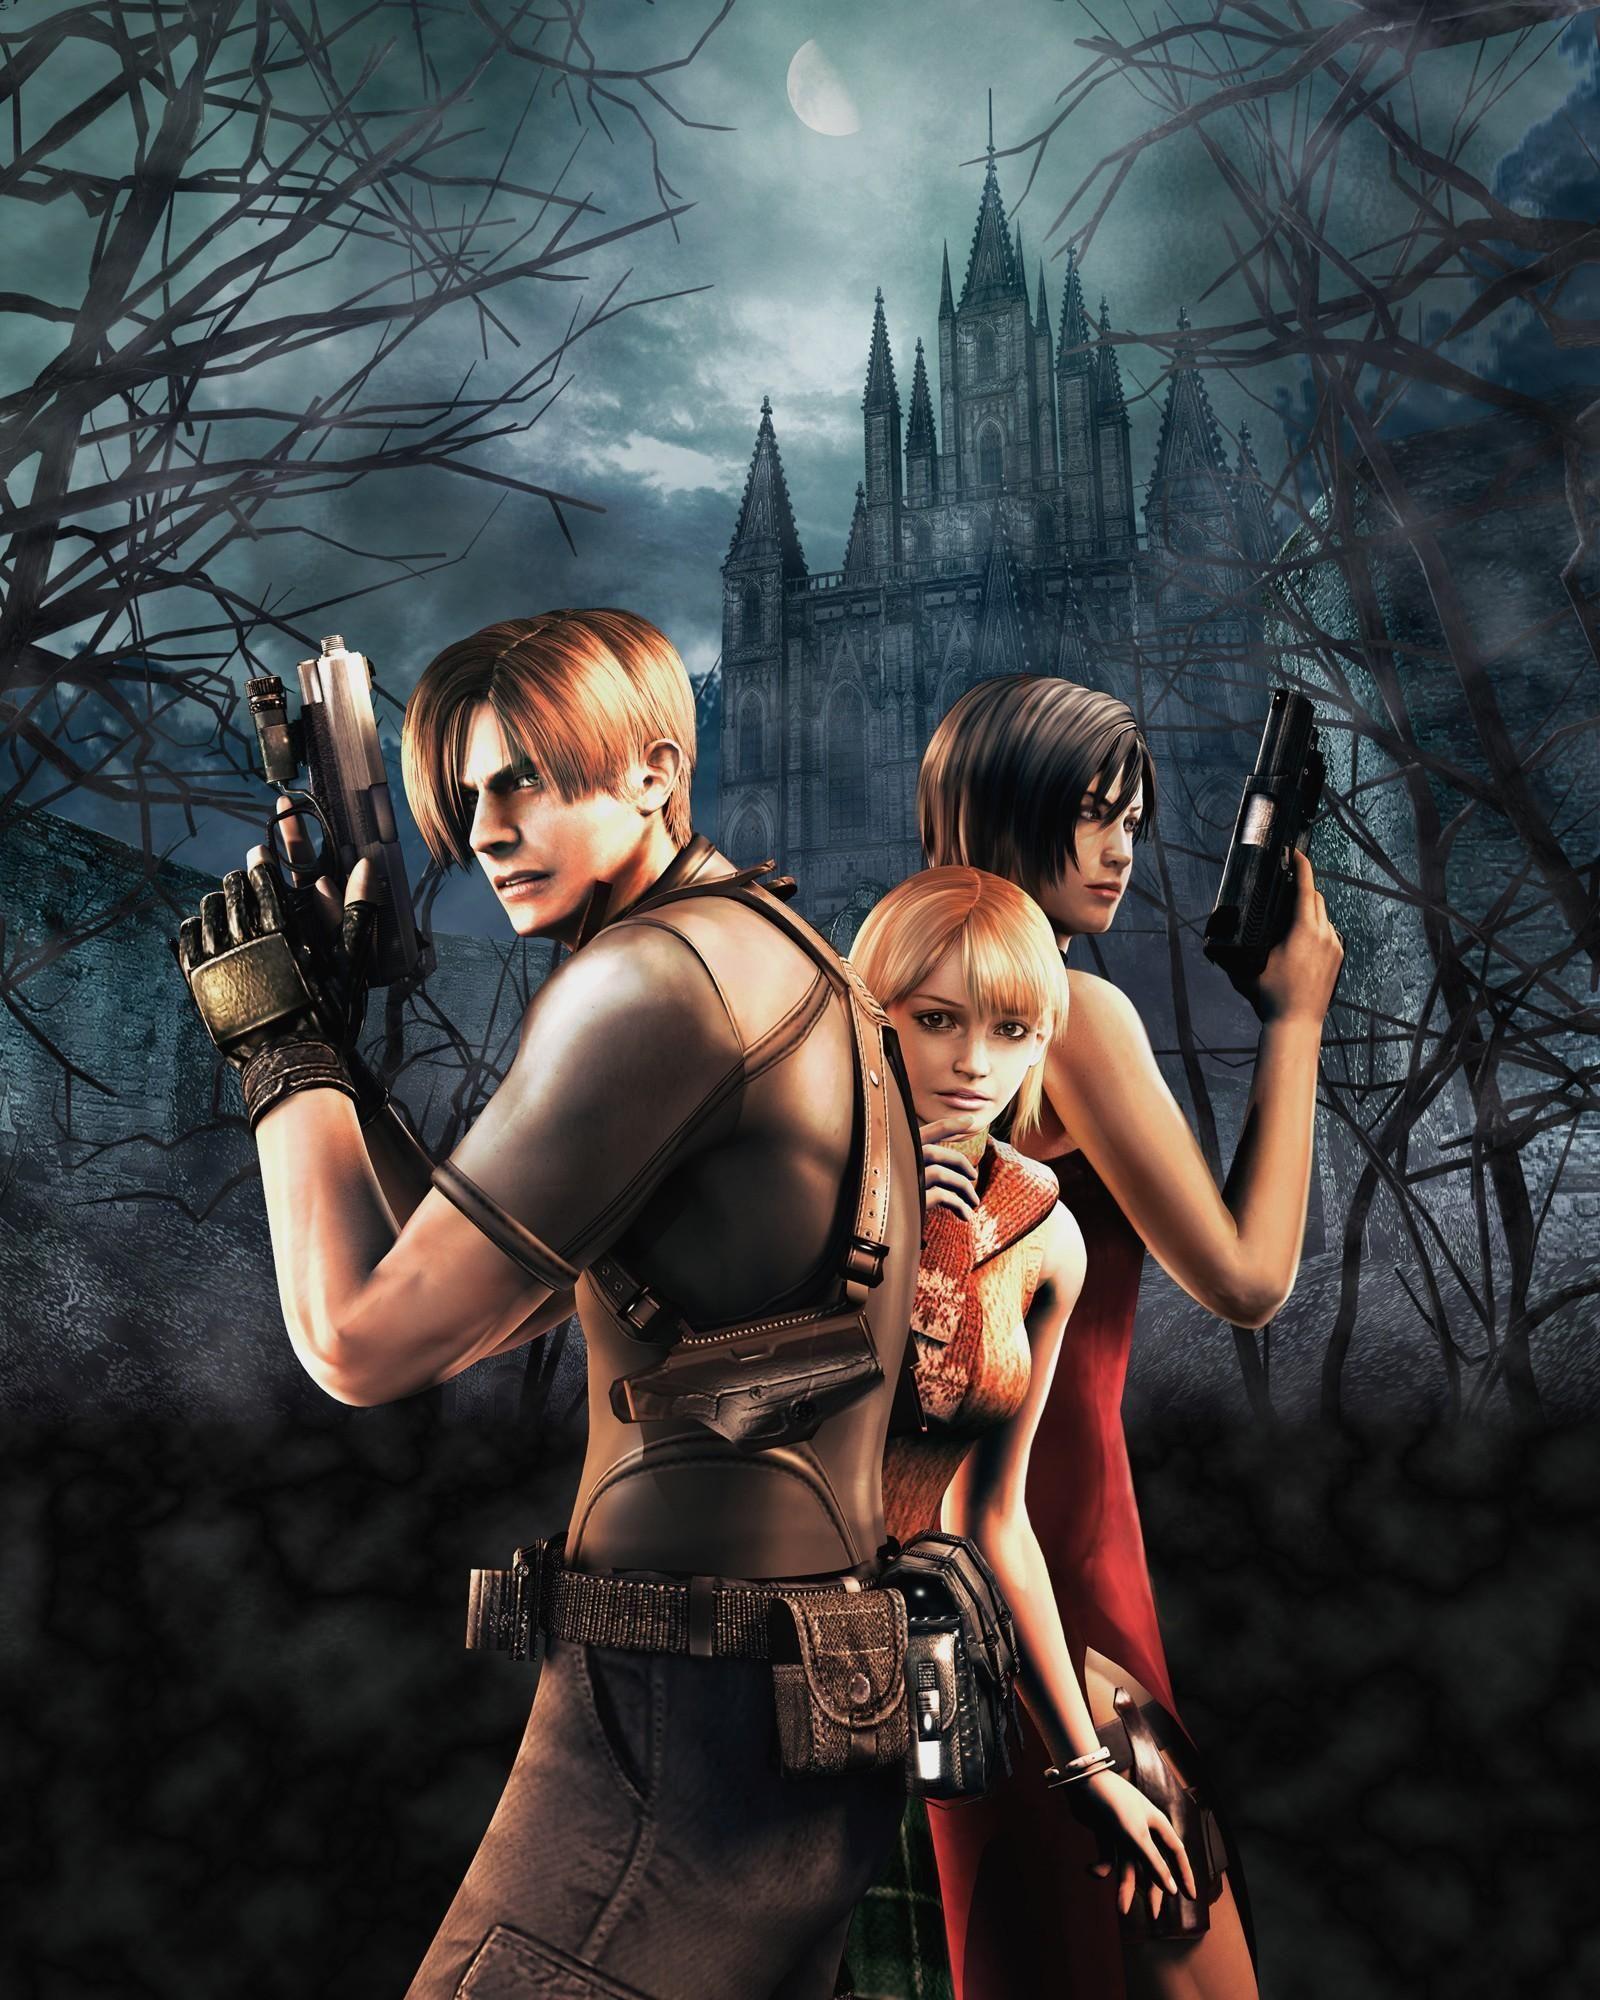 Leon S Kennedy Luis Sera HD Resident Evil 4 Wallpapers  HD Wallpapers   ID 104621